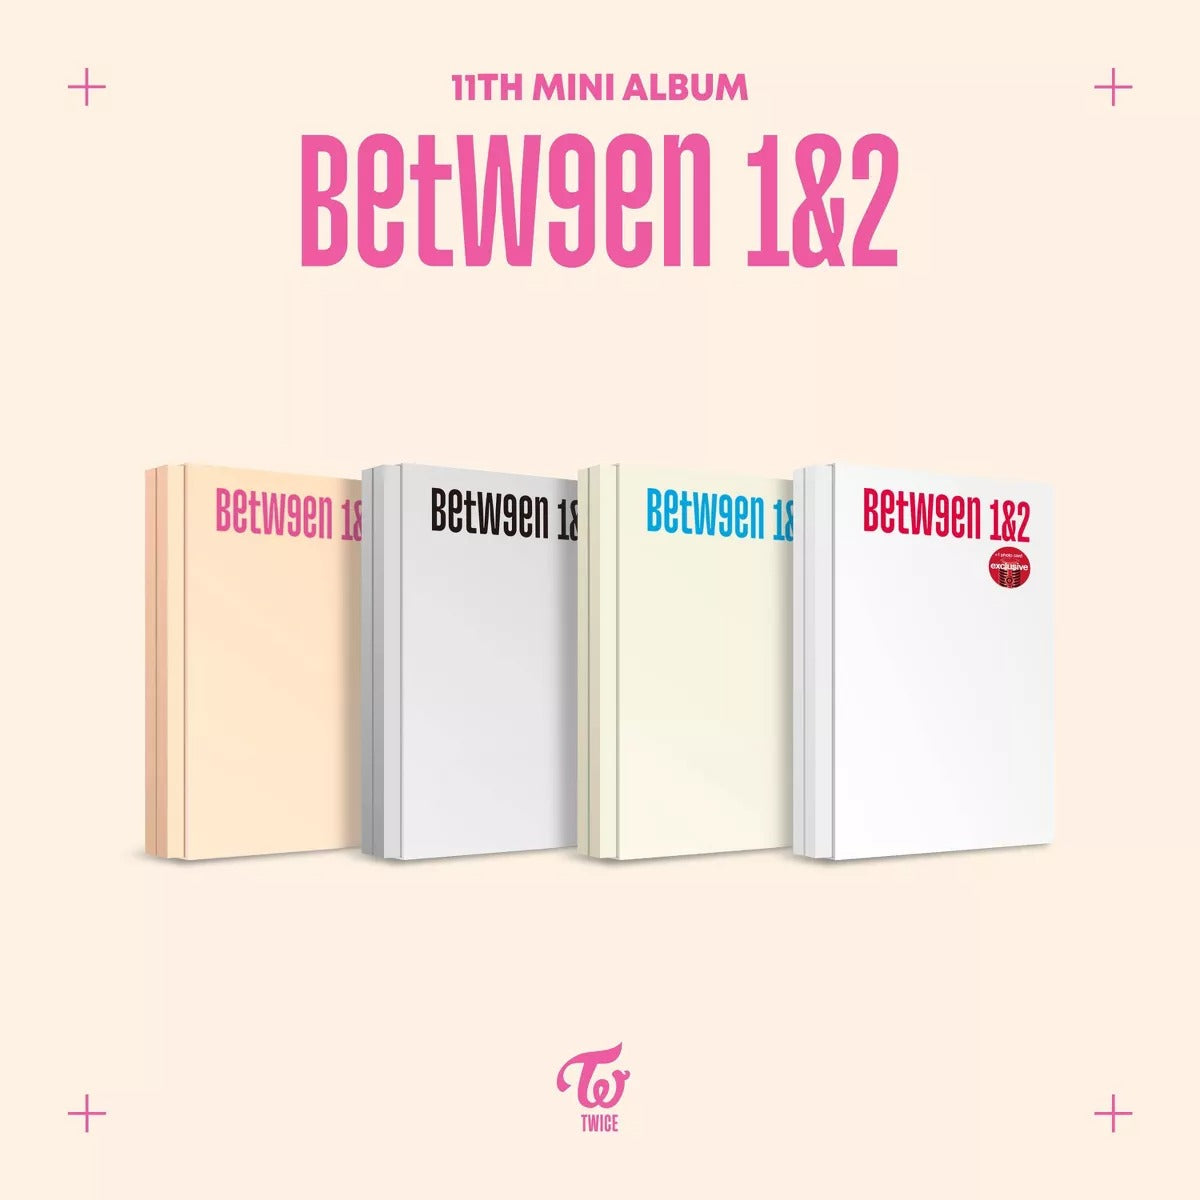 TWICE 11TH MINI ALBUM 'BETWEEN 1&2' SET COVER